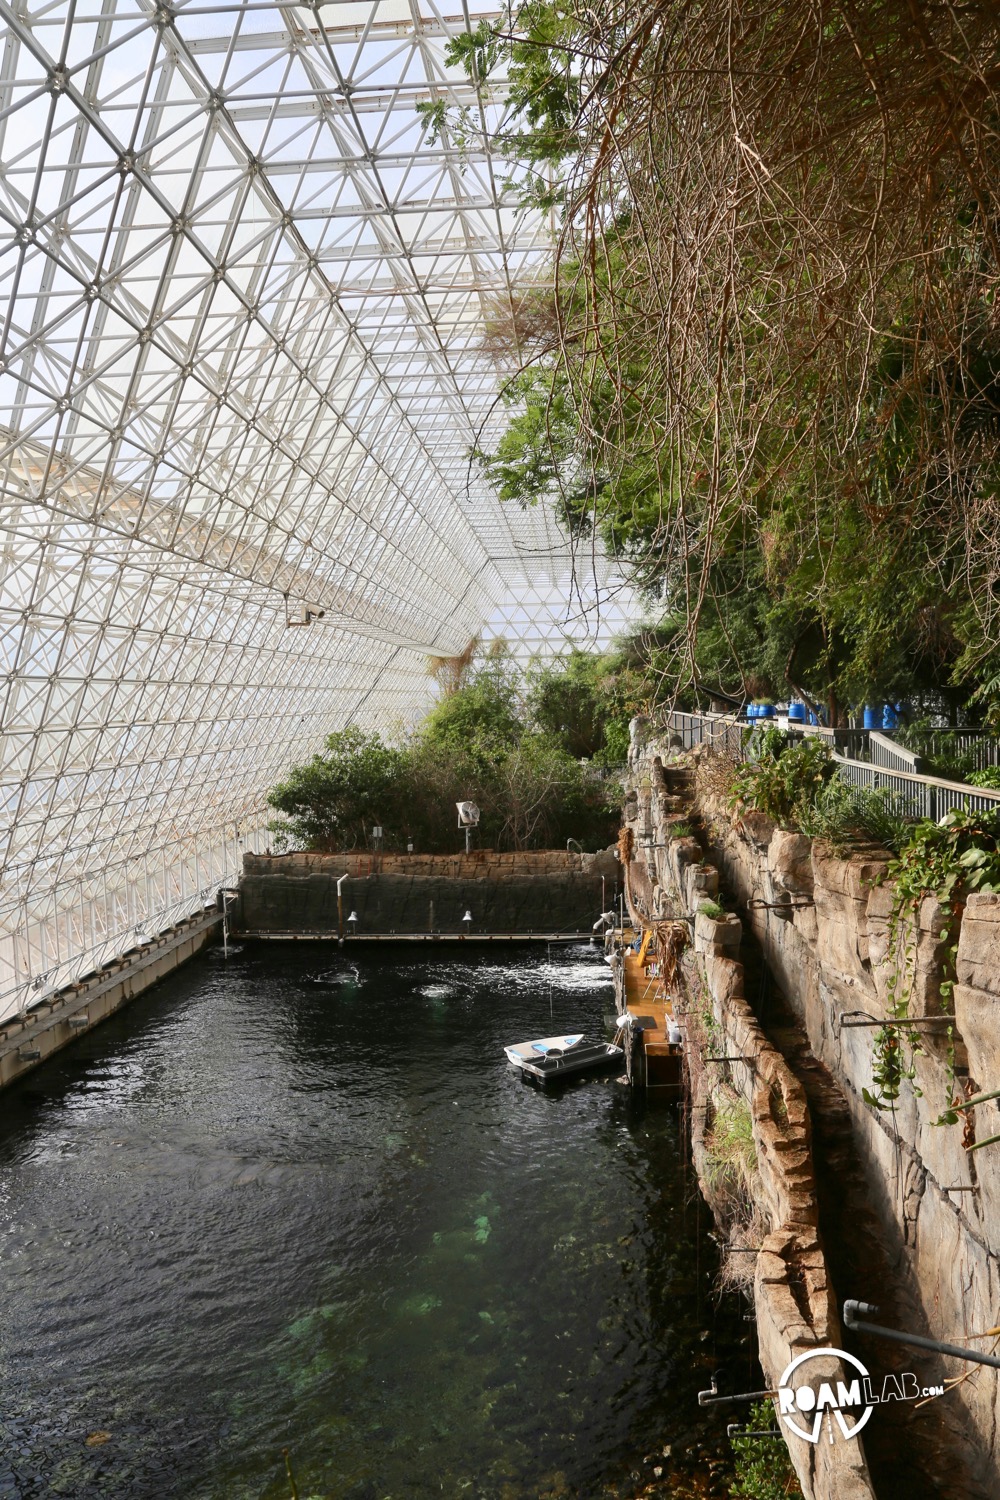 Biosphere 2: A Cult's Science Fiction Future - Oracle, Arizona | Roam Lab